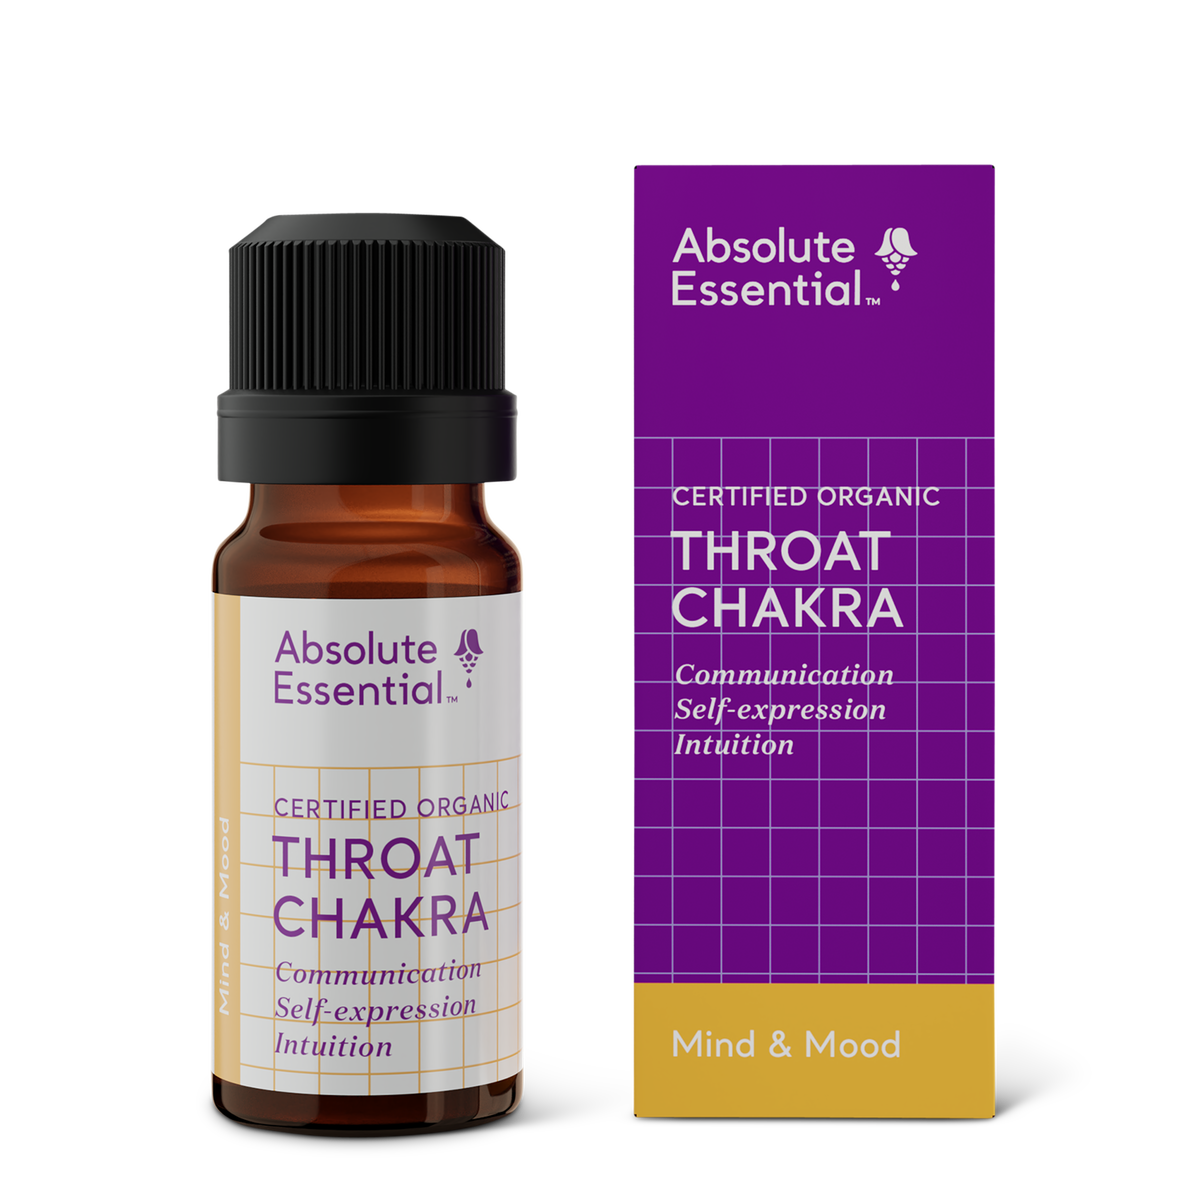 Absolute Essential Throat Chakra